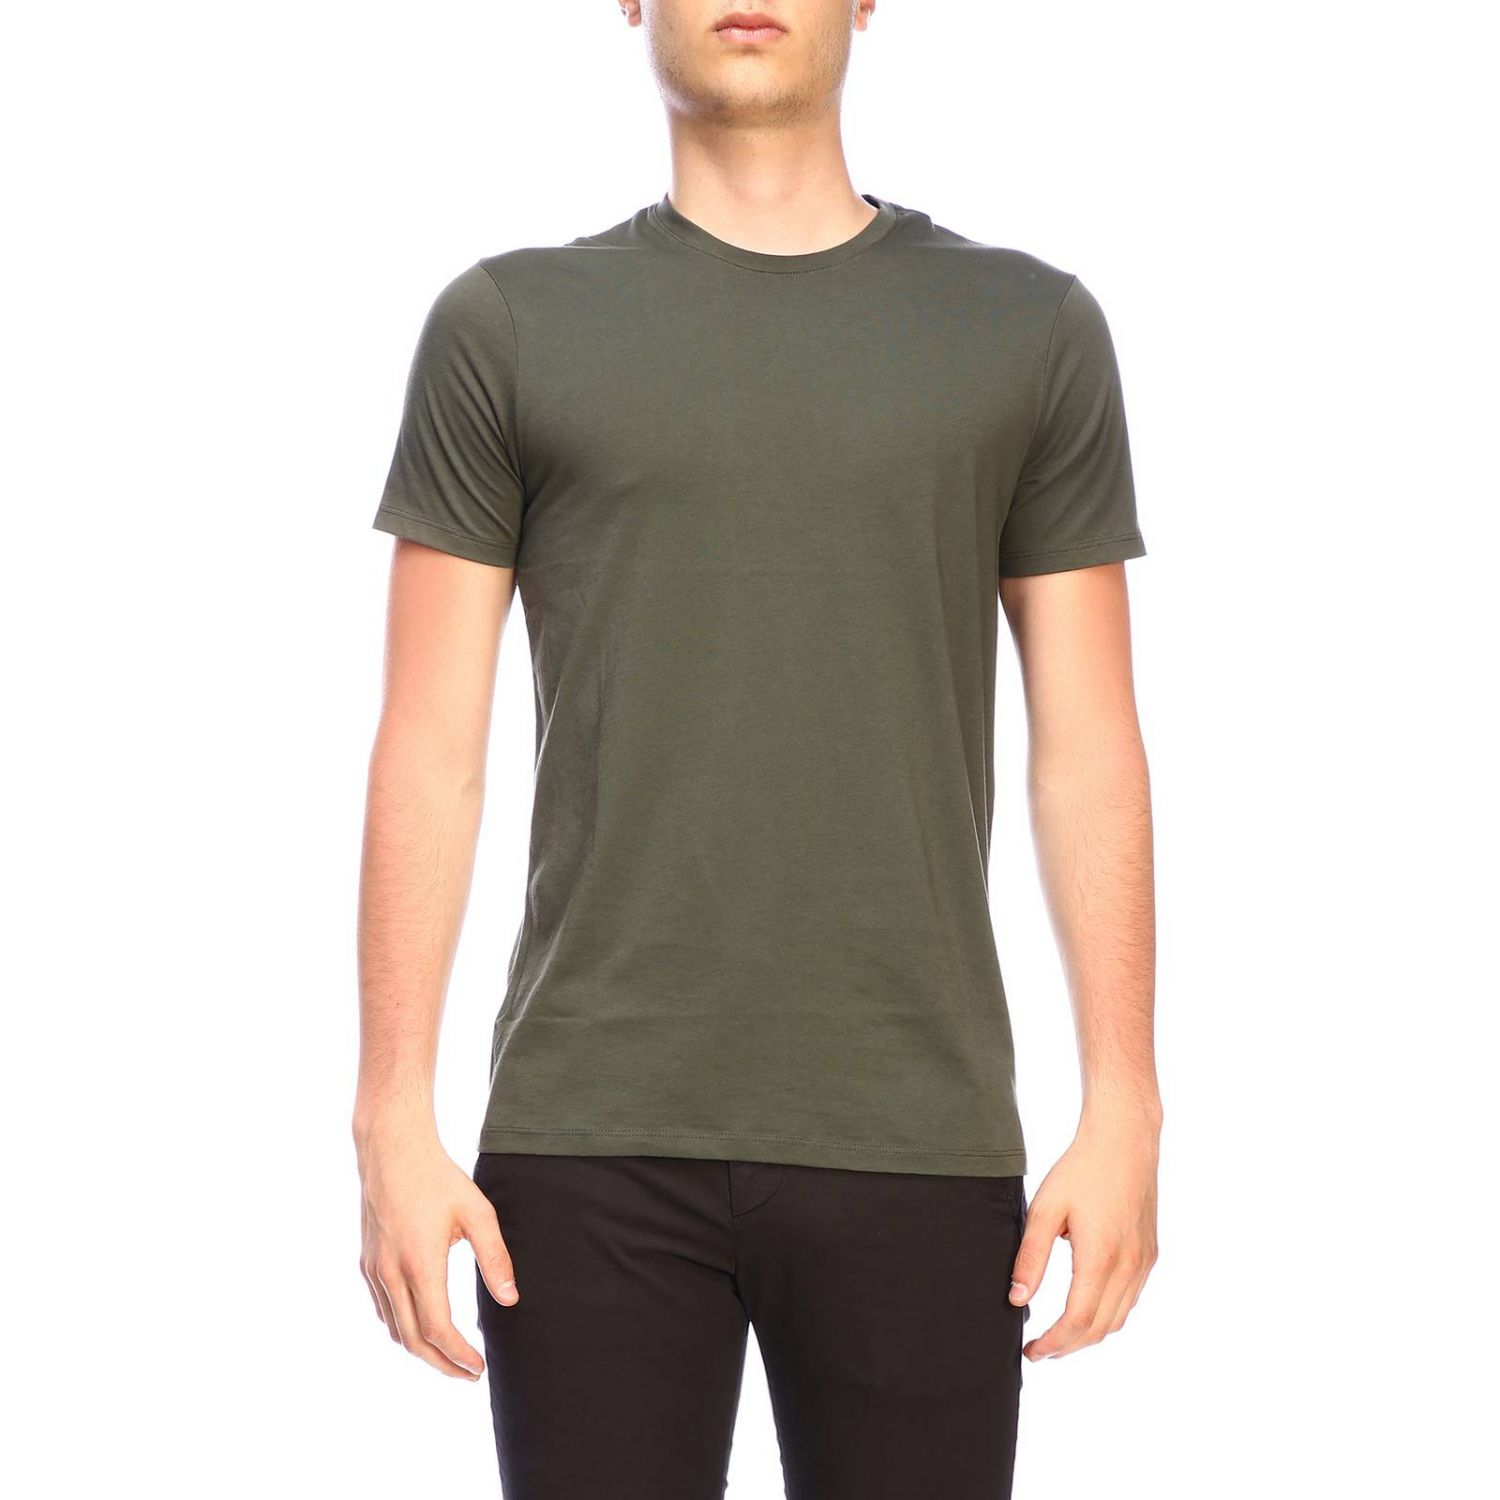 Armani Exchange Outlet: short-sleeved basic t-shirt - Military | Armani ...